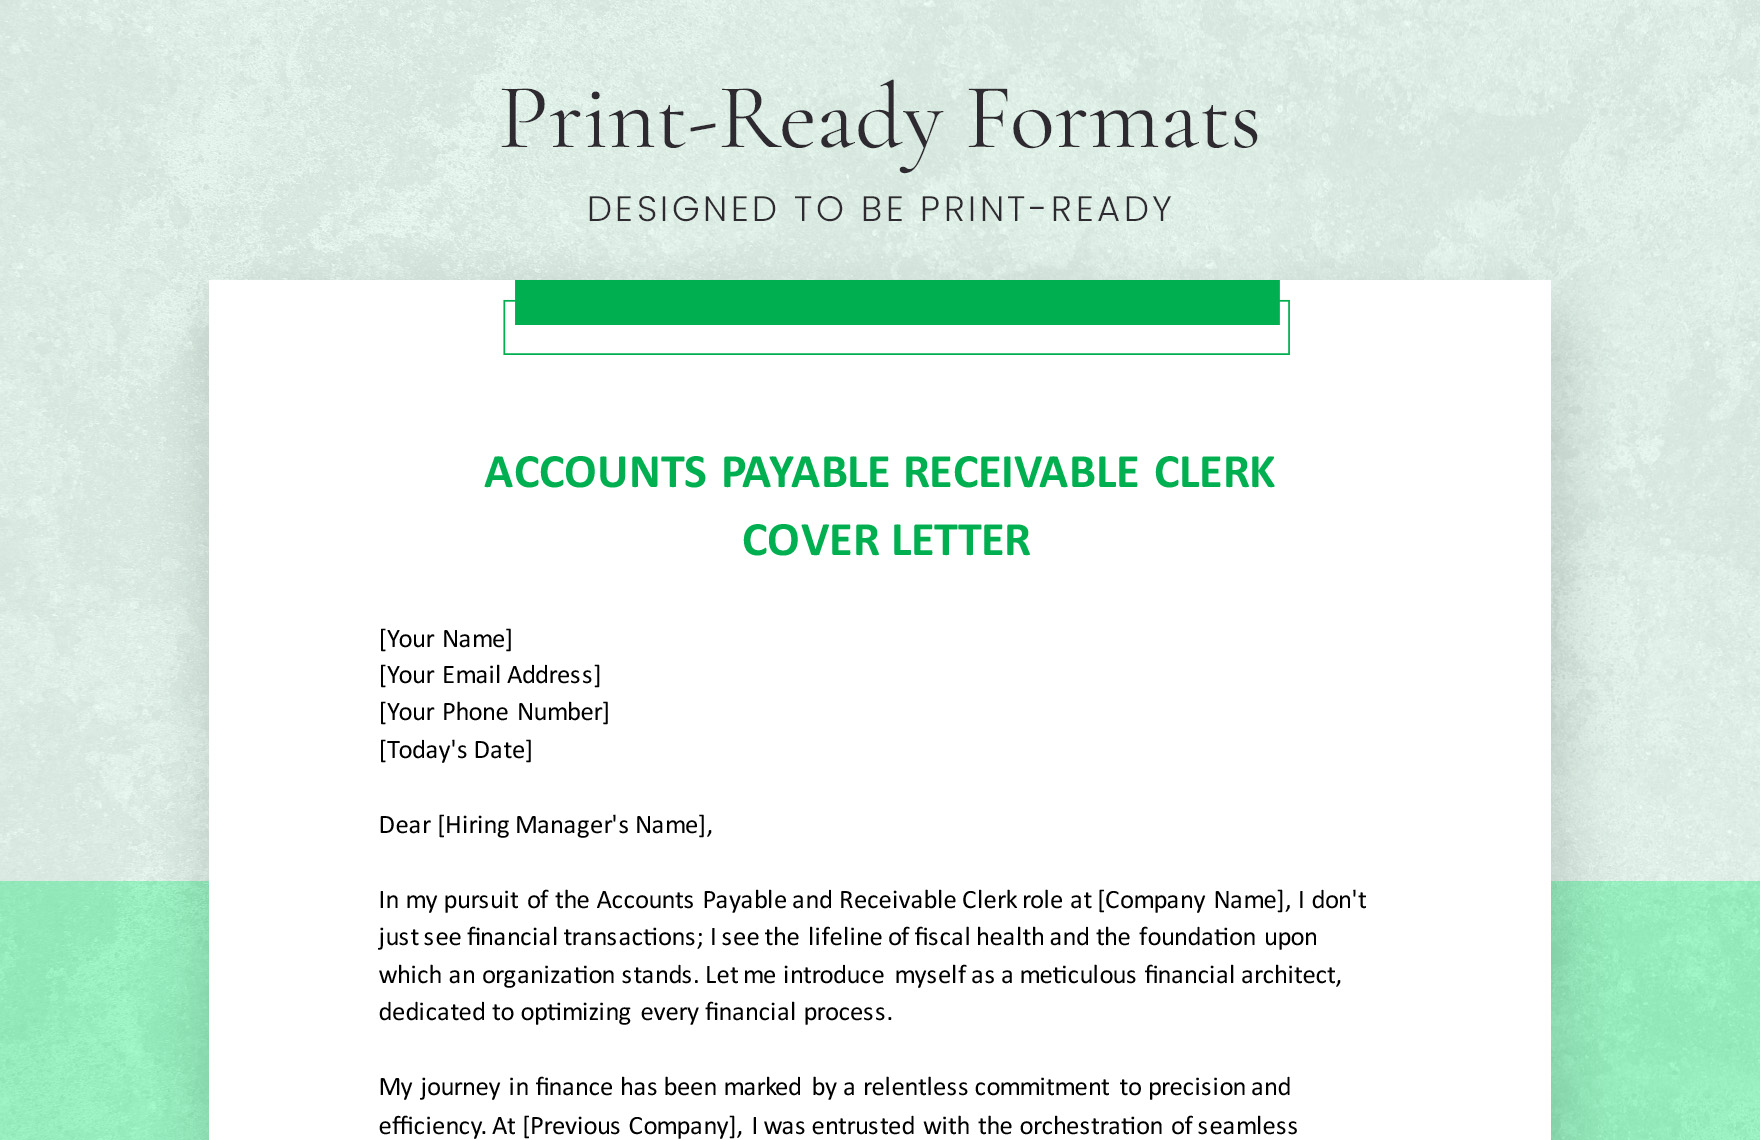 Accounts Payable Receivable Clerk Cover Letter